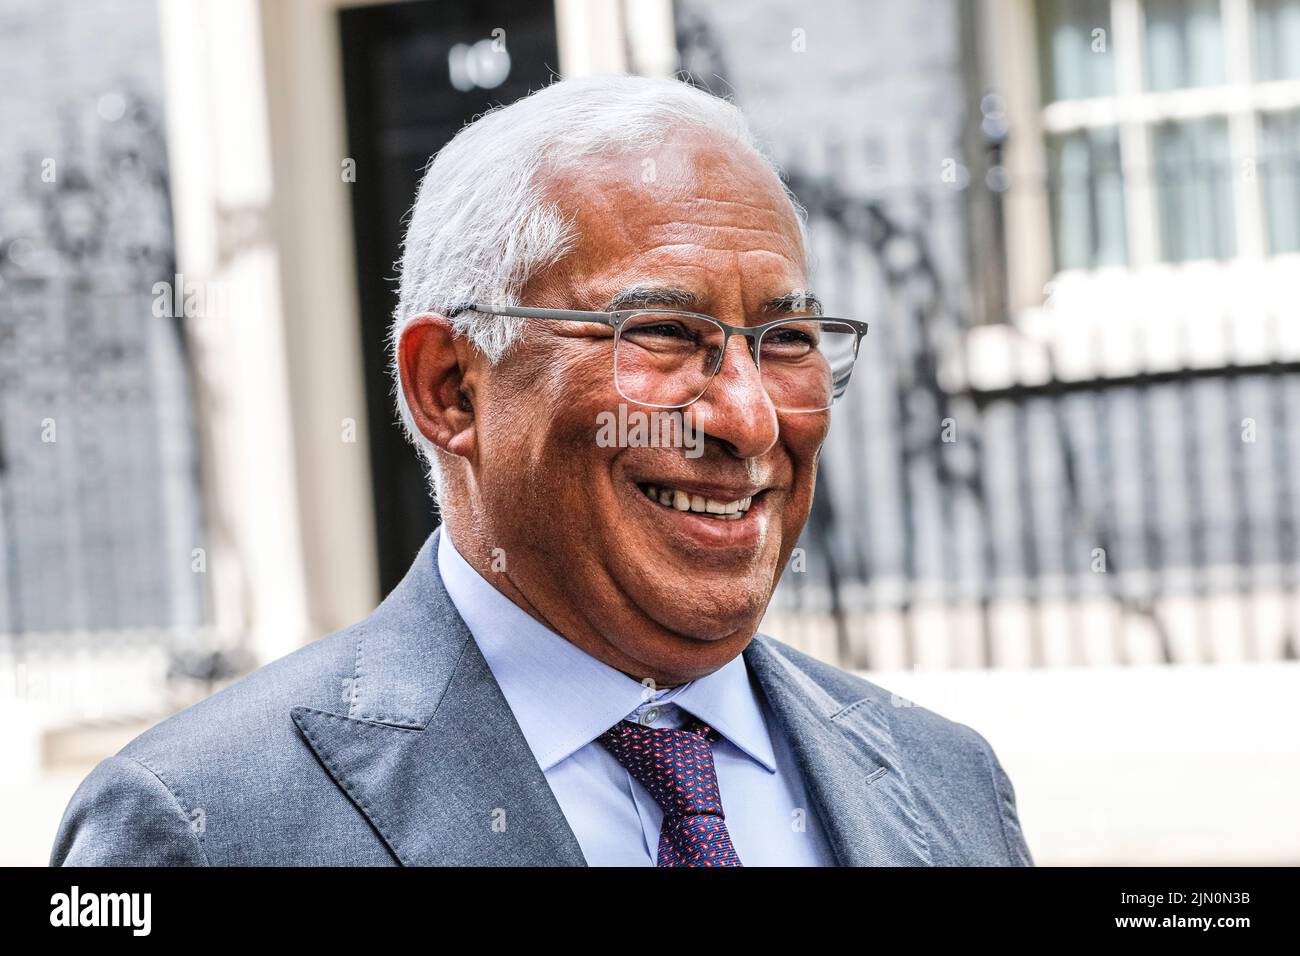 António Costa, Primer Ministro de Portugal, visita oficial a Londres, primer plano de cara sonriente Foto de stock